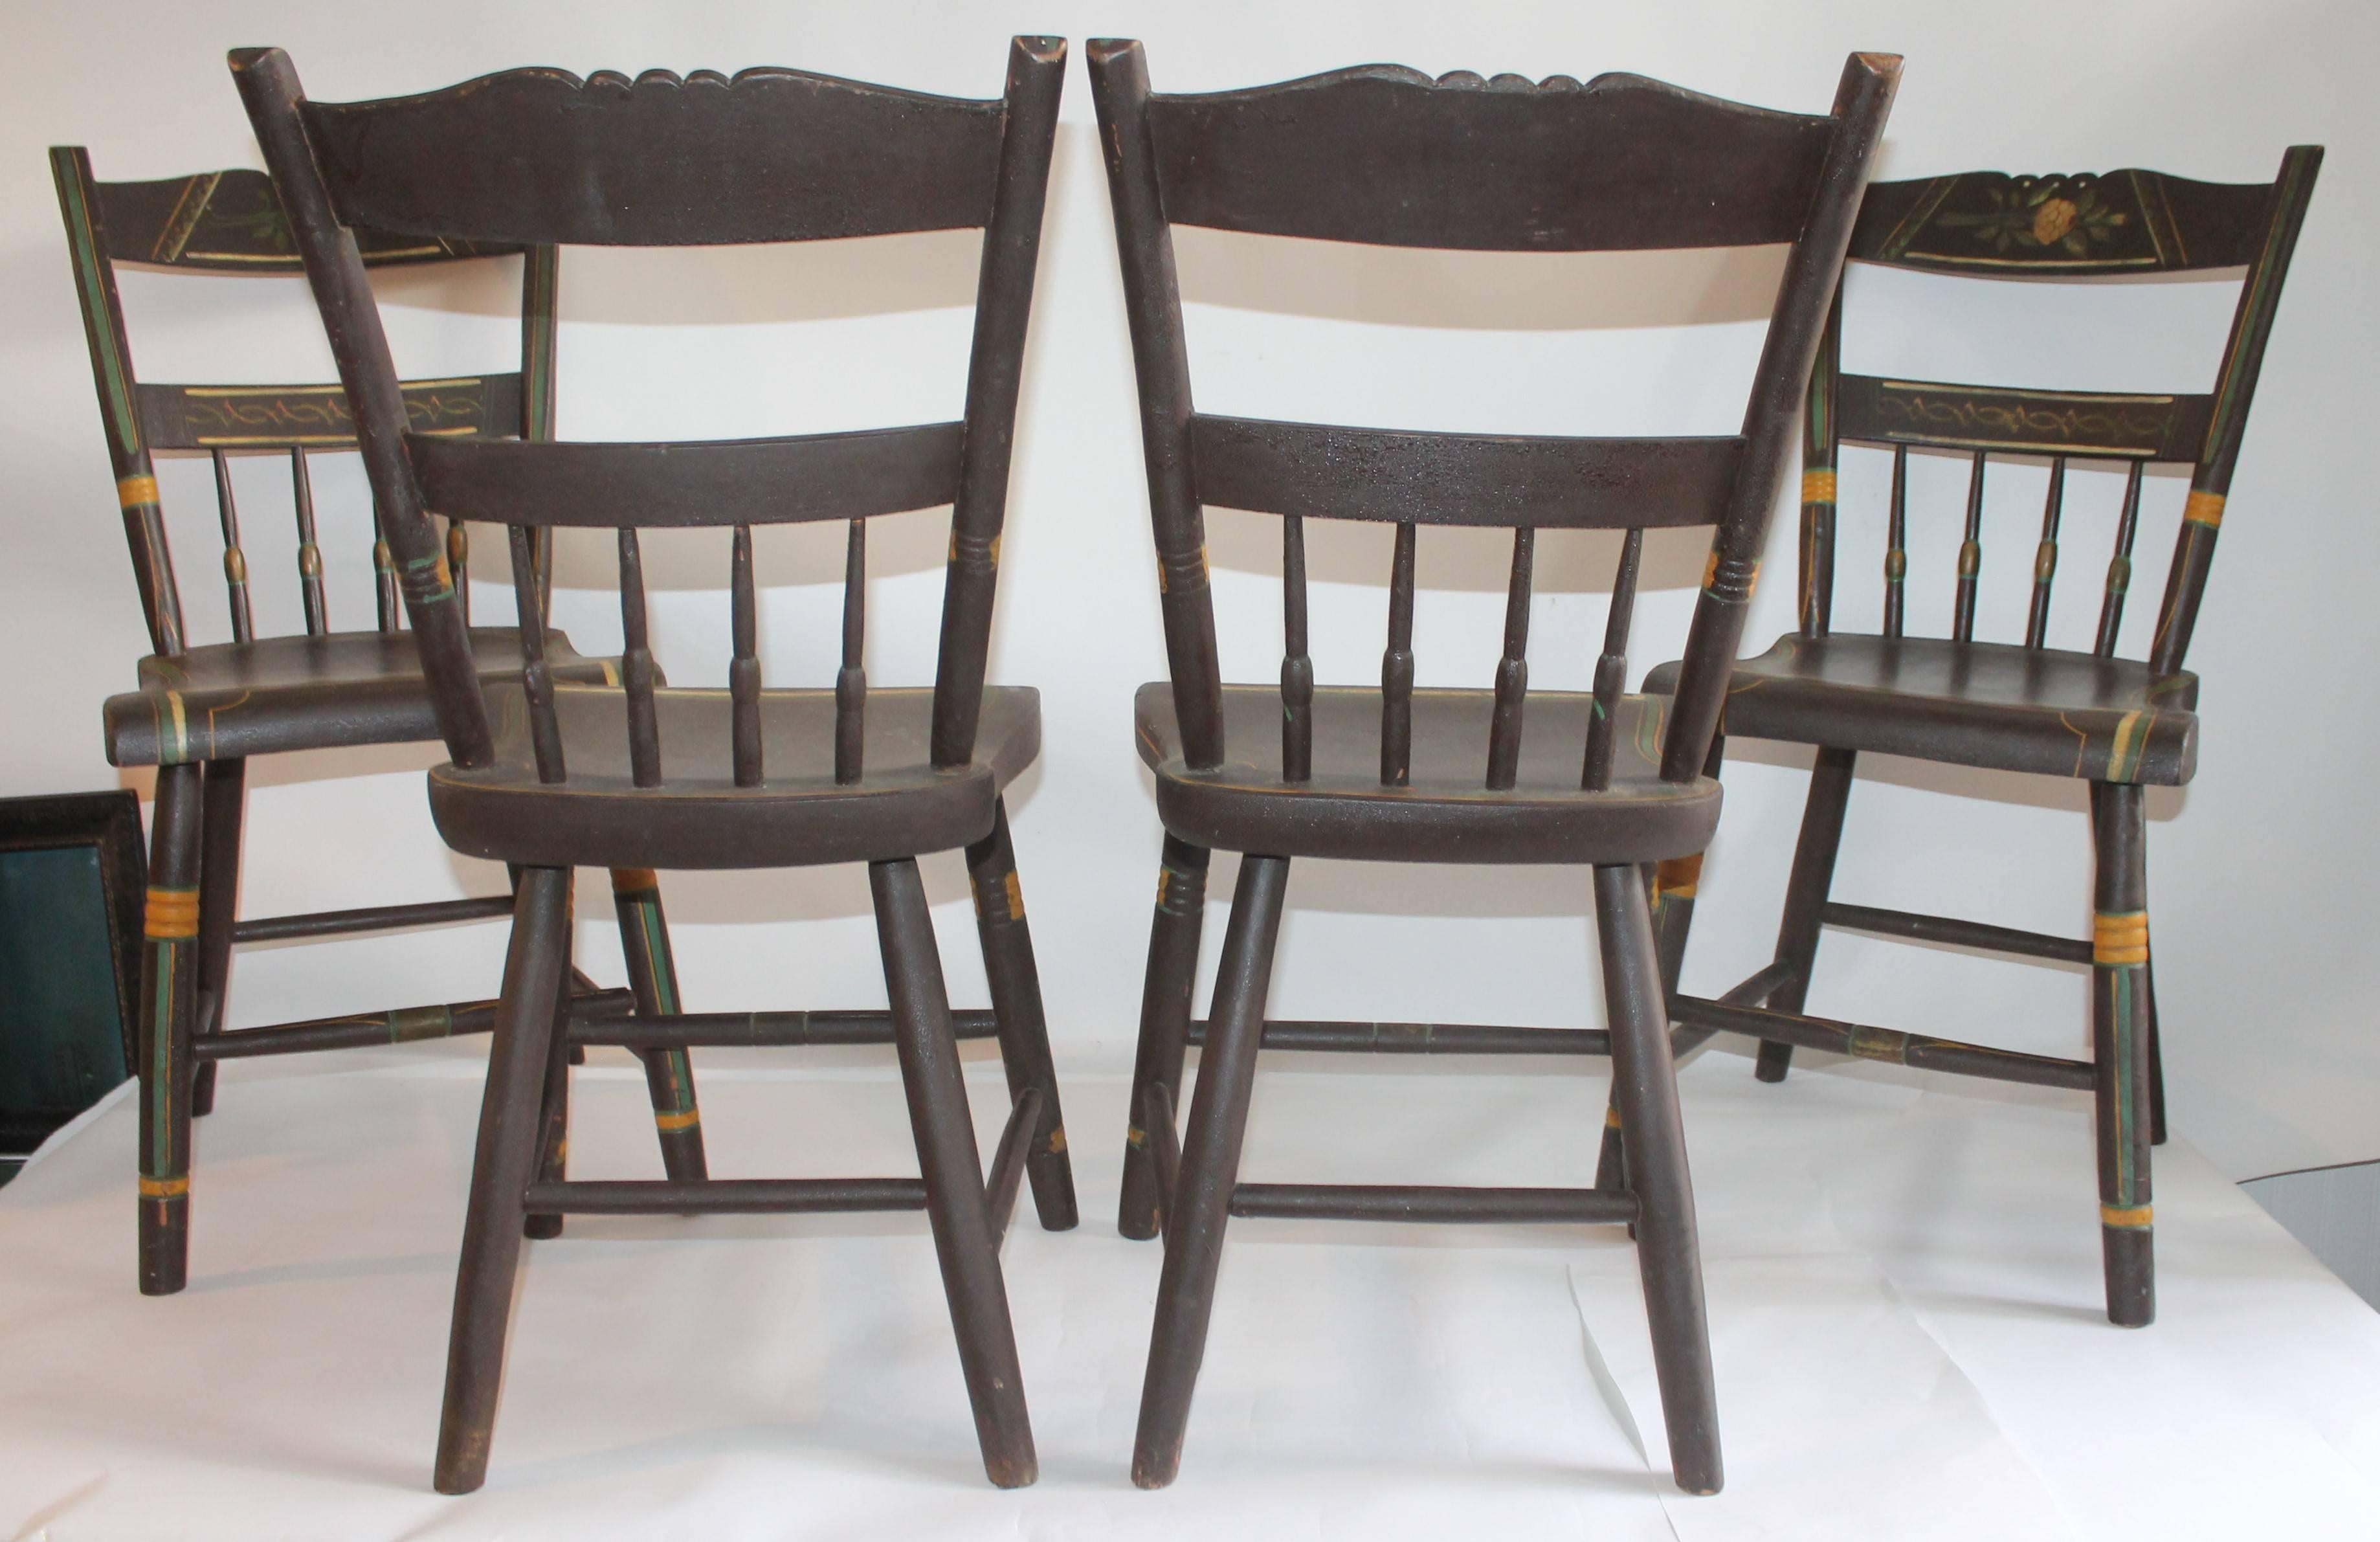 Pine 19th Century Original Paint Decorated Pennsylvania Plank Bottom Chairs